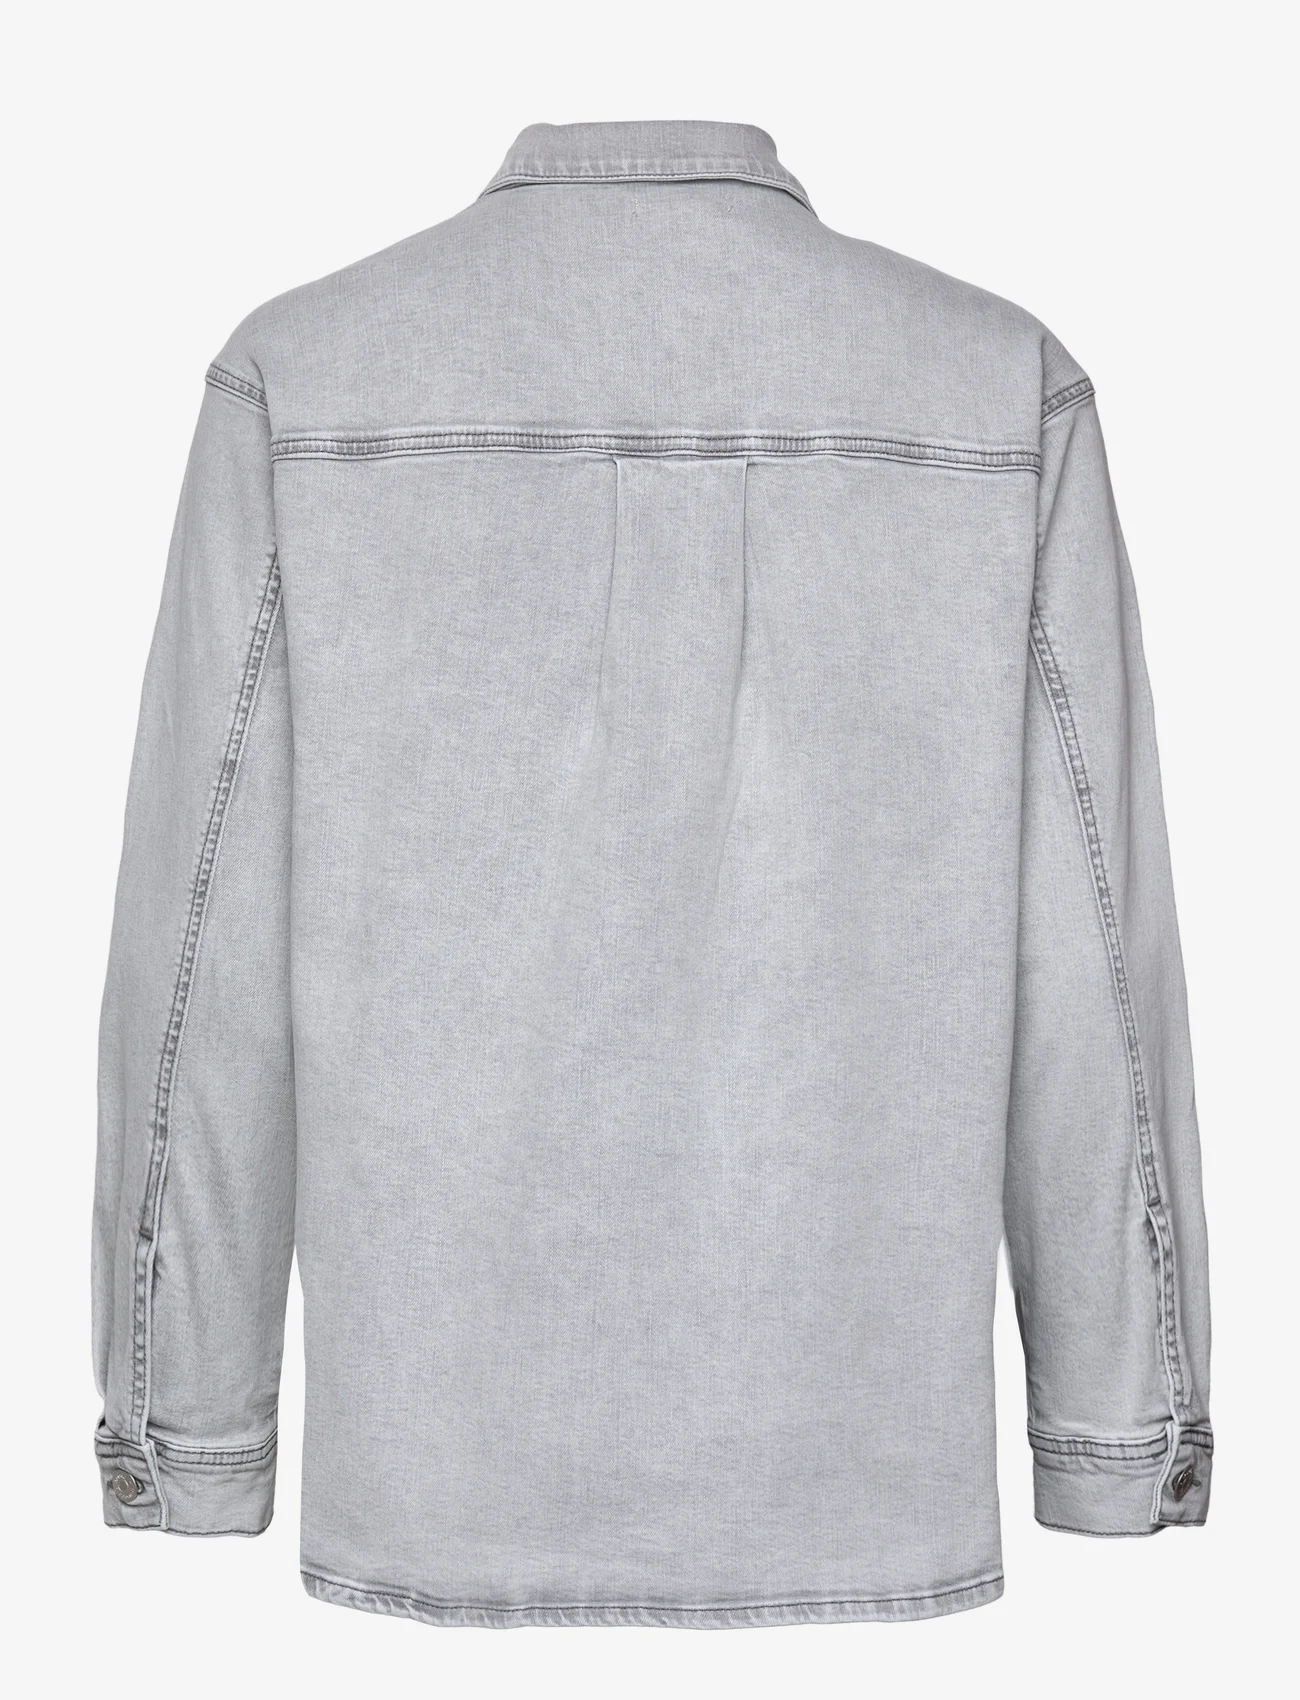 Basic Apparel - Etta Shirt - grey - 1